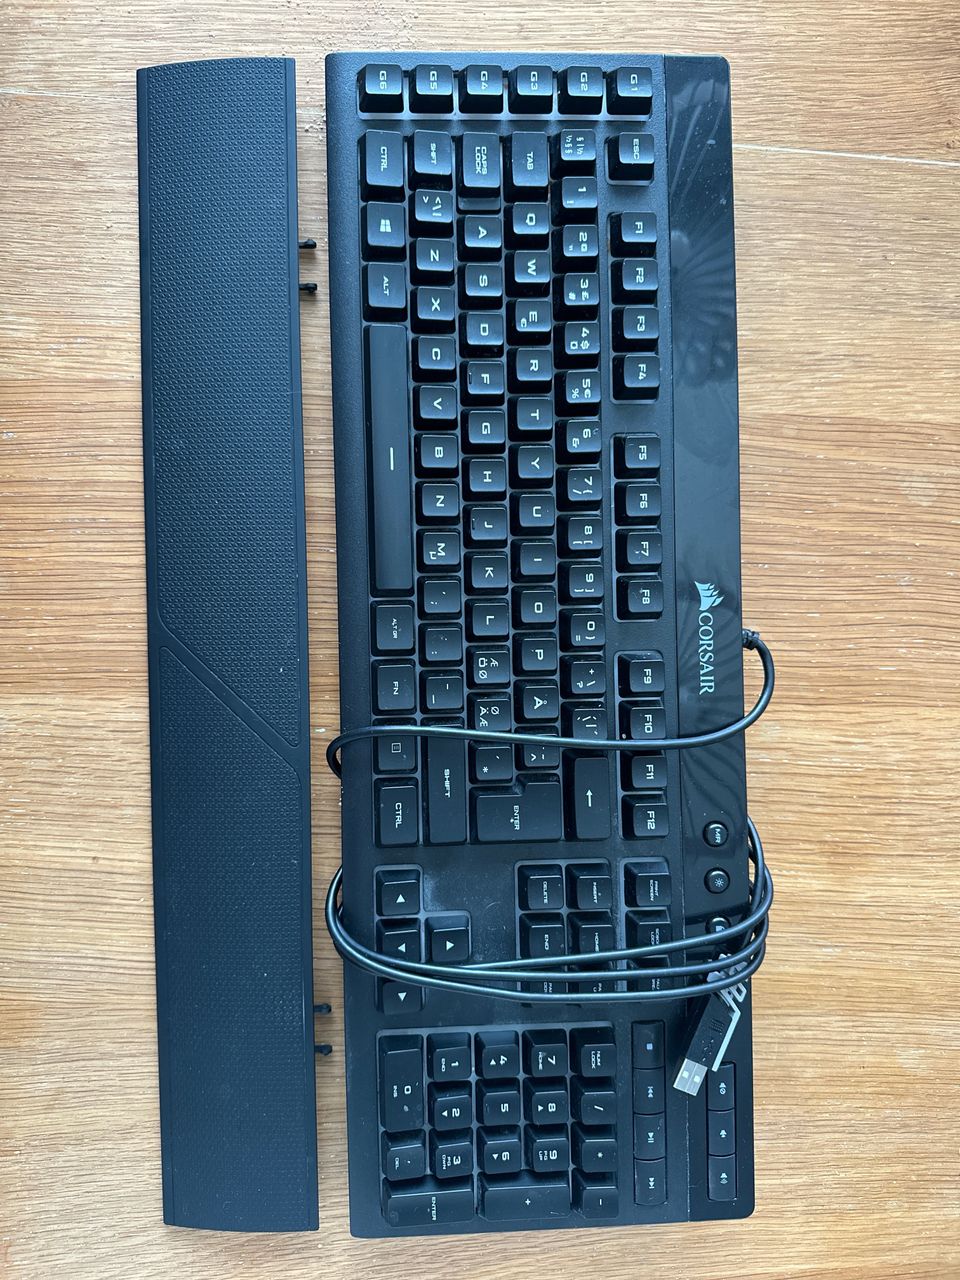 Corsair K55 rgb keyboard